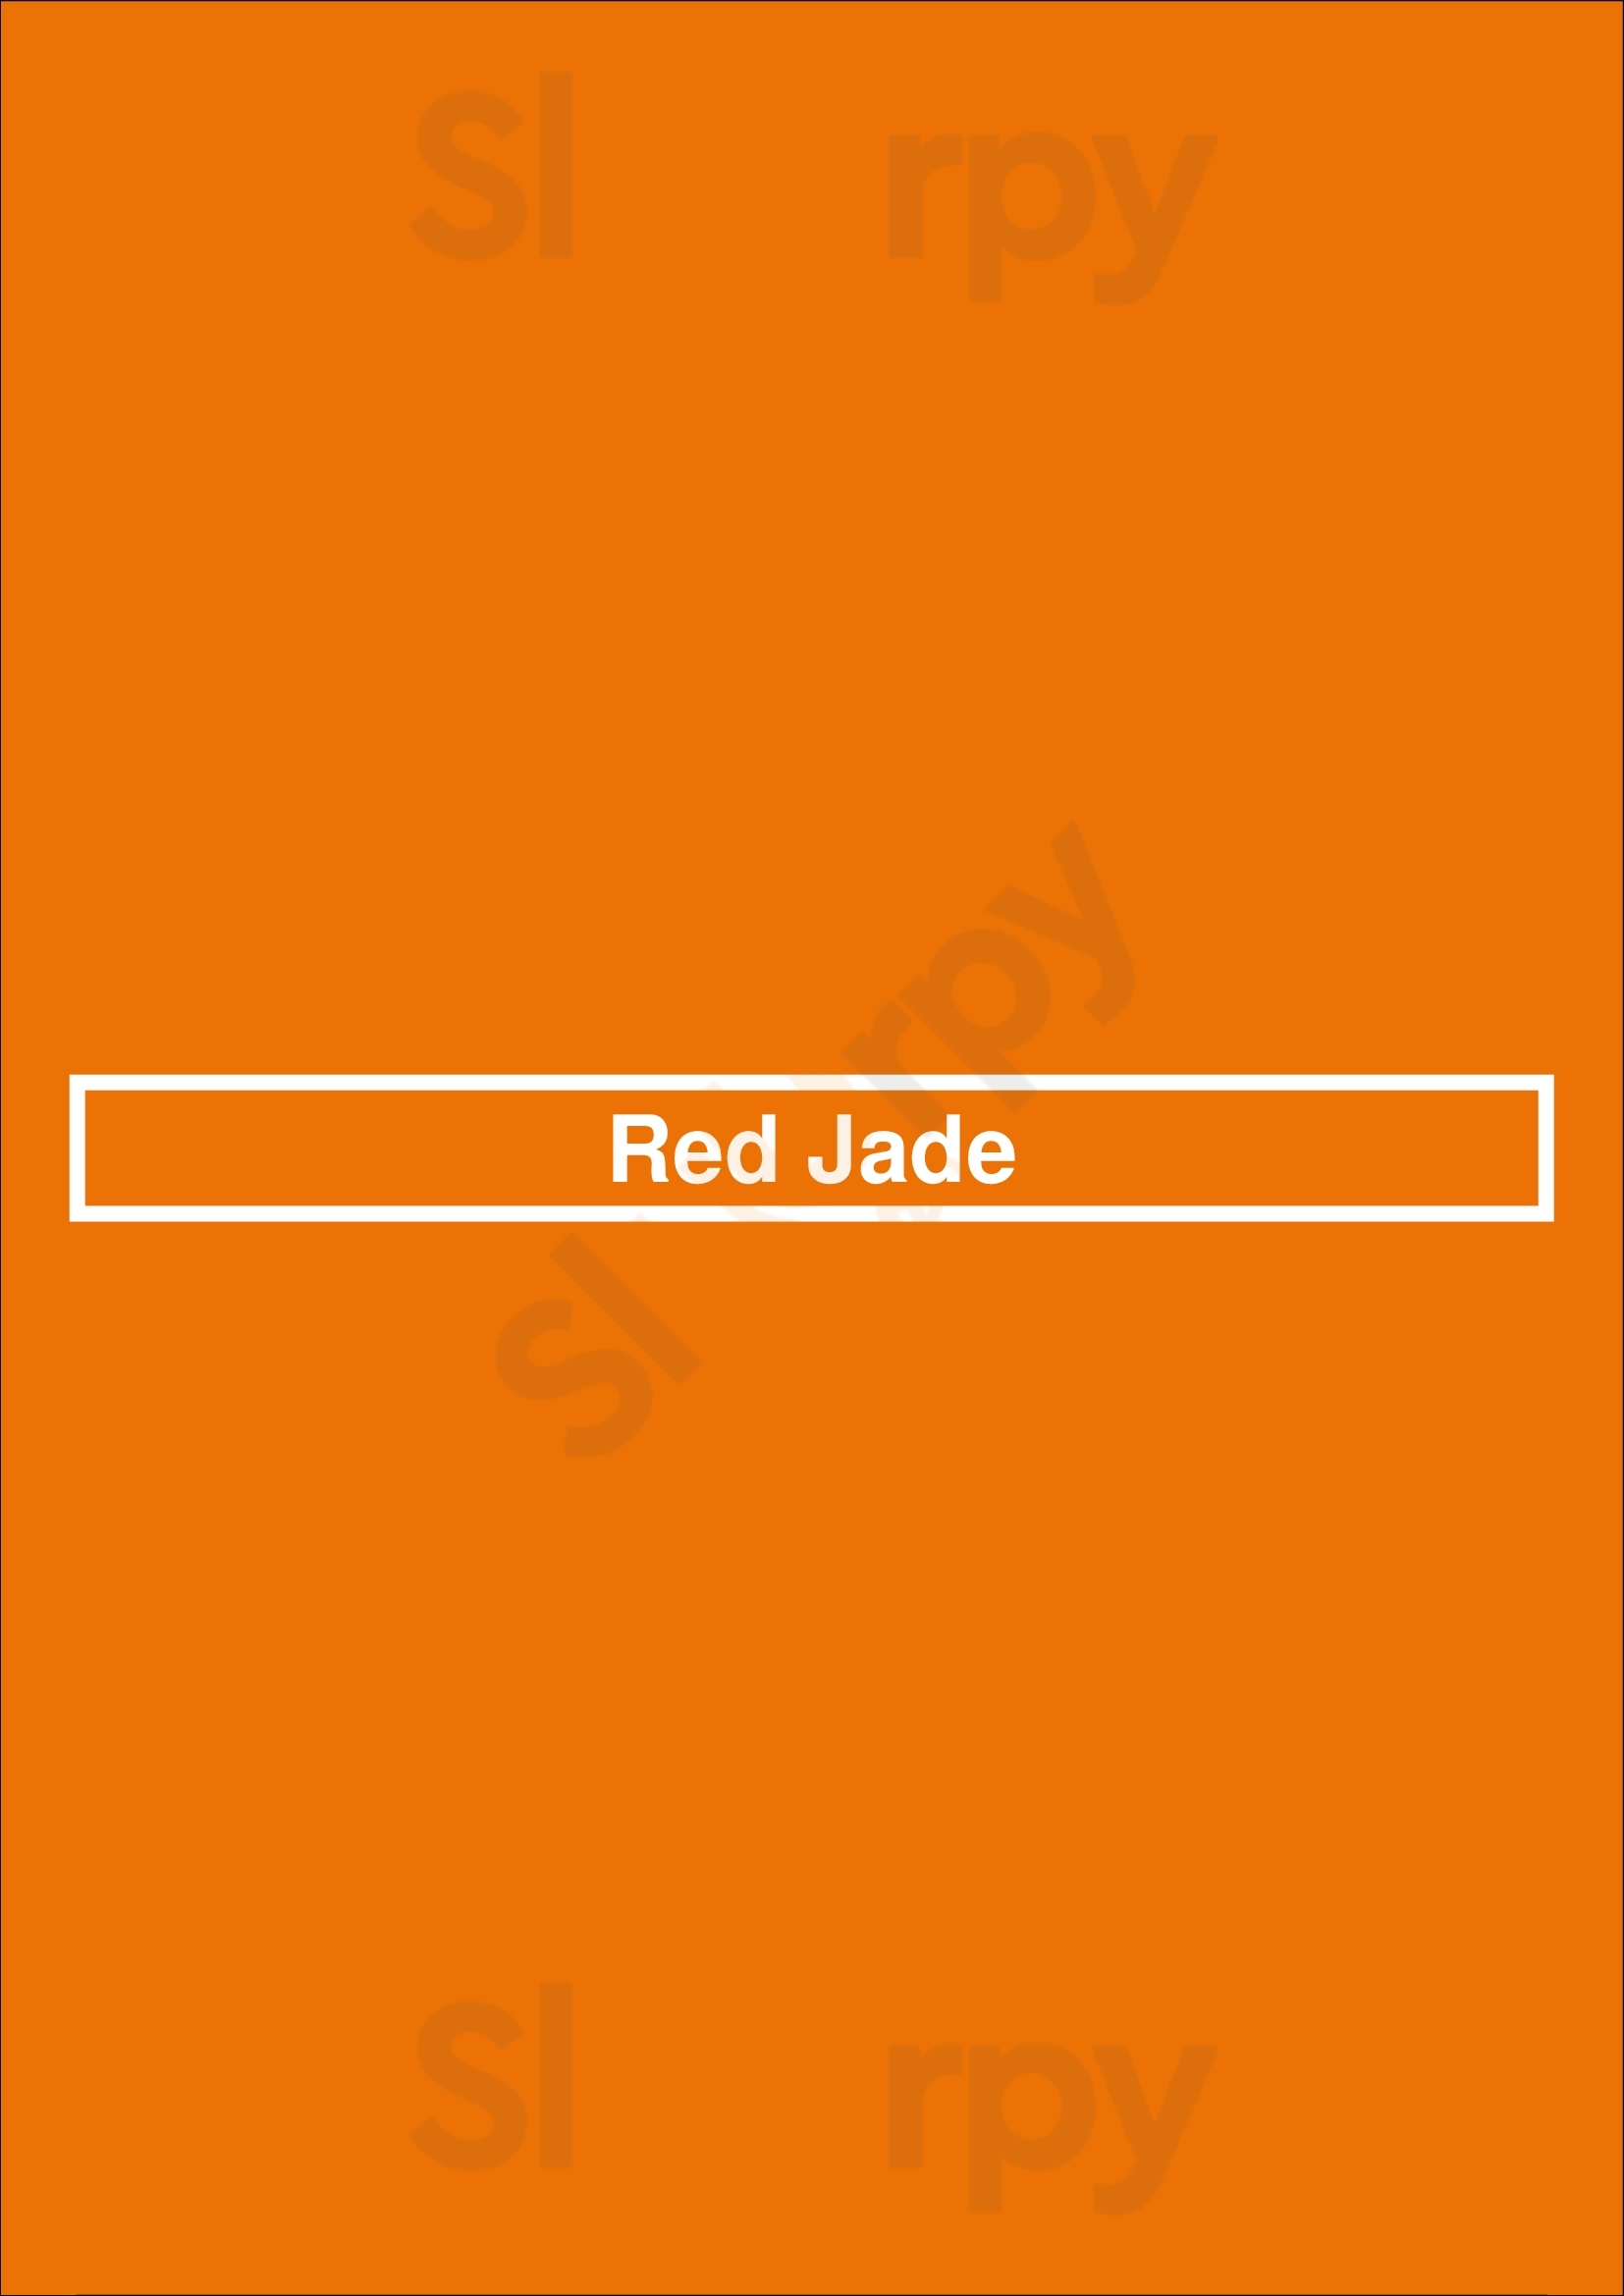 Red Jade San Francisco Menu - 1